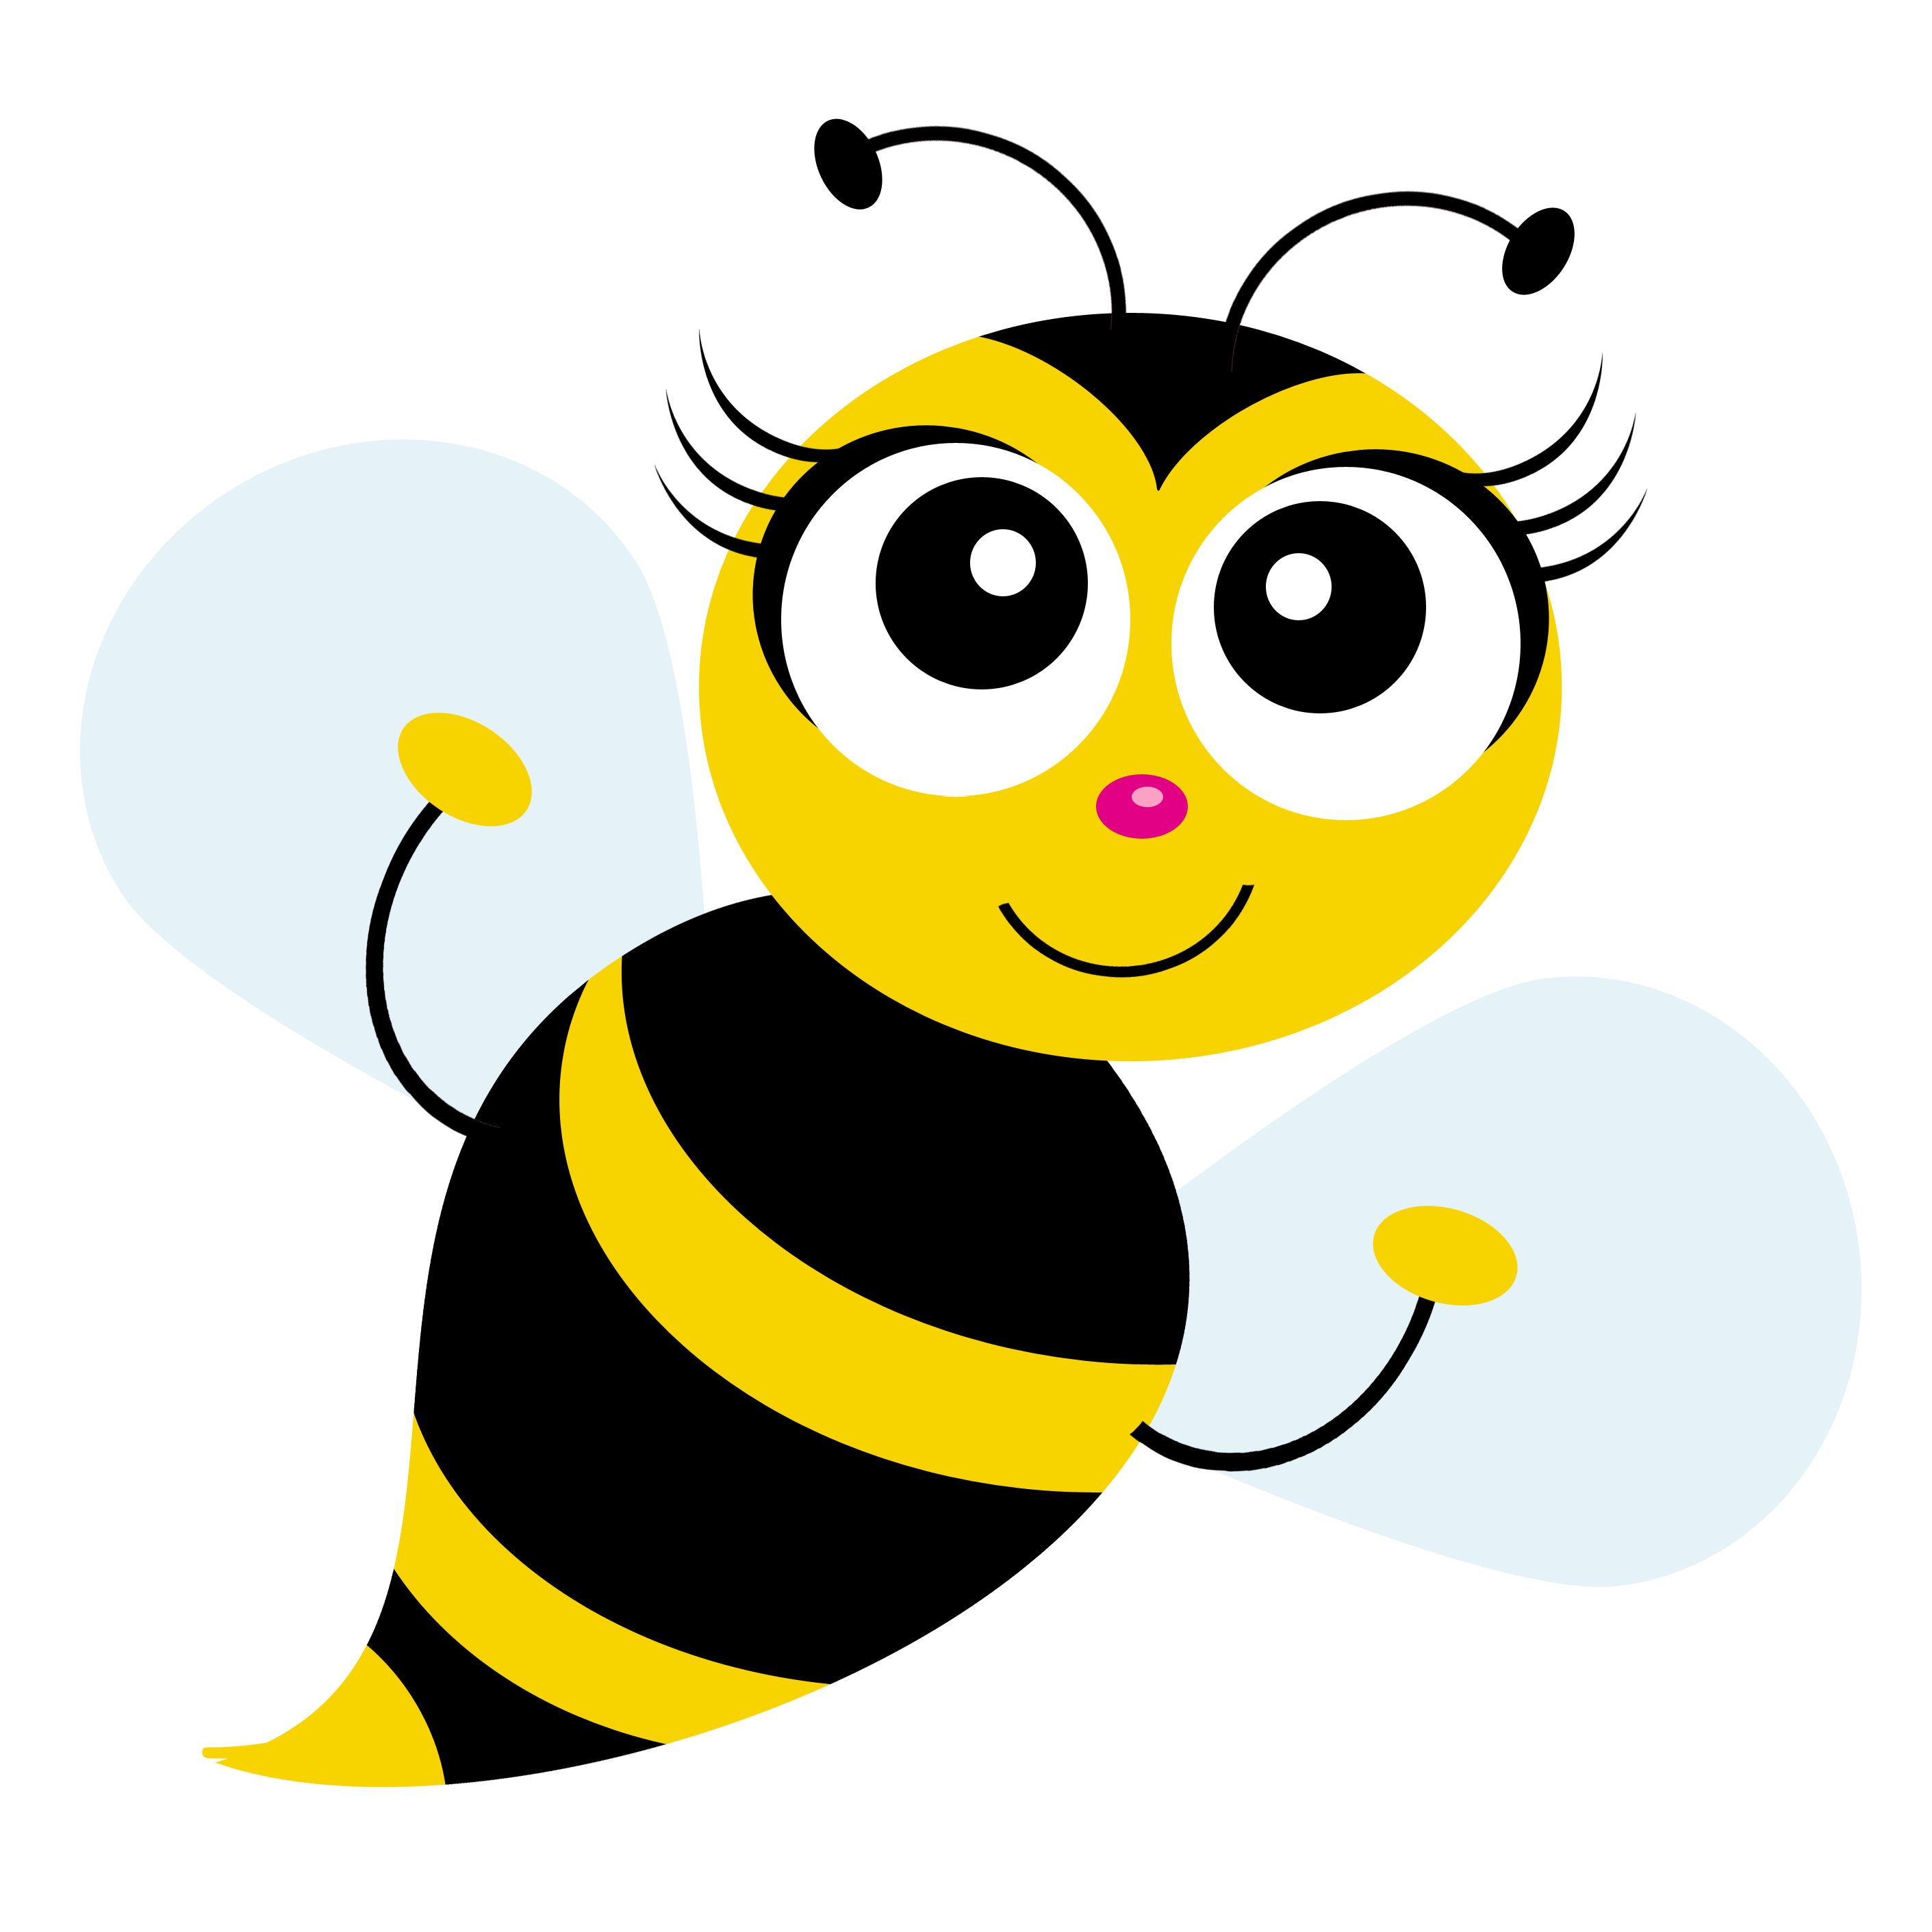 Пчелка. Пчелка на белом фоне. Пчелка на прозрачном фоне. Пчела картинка на прозрачном фоне. Включи маленькая пчелка